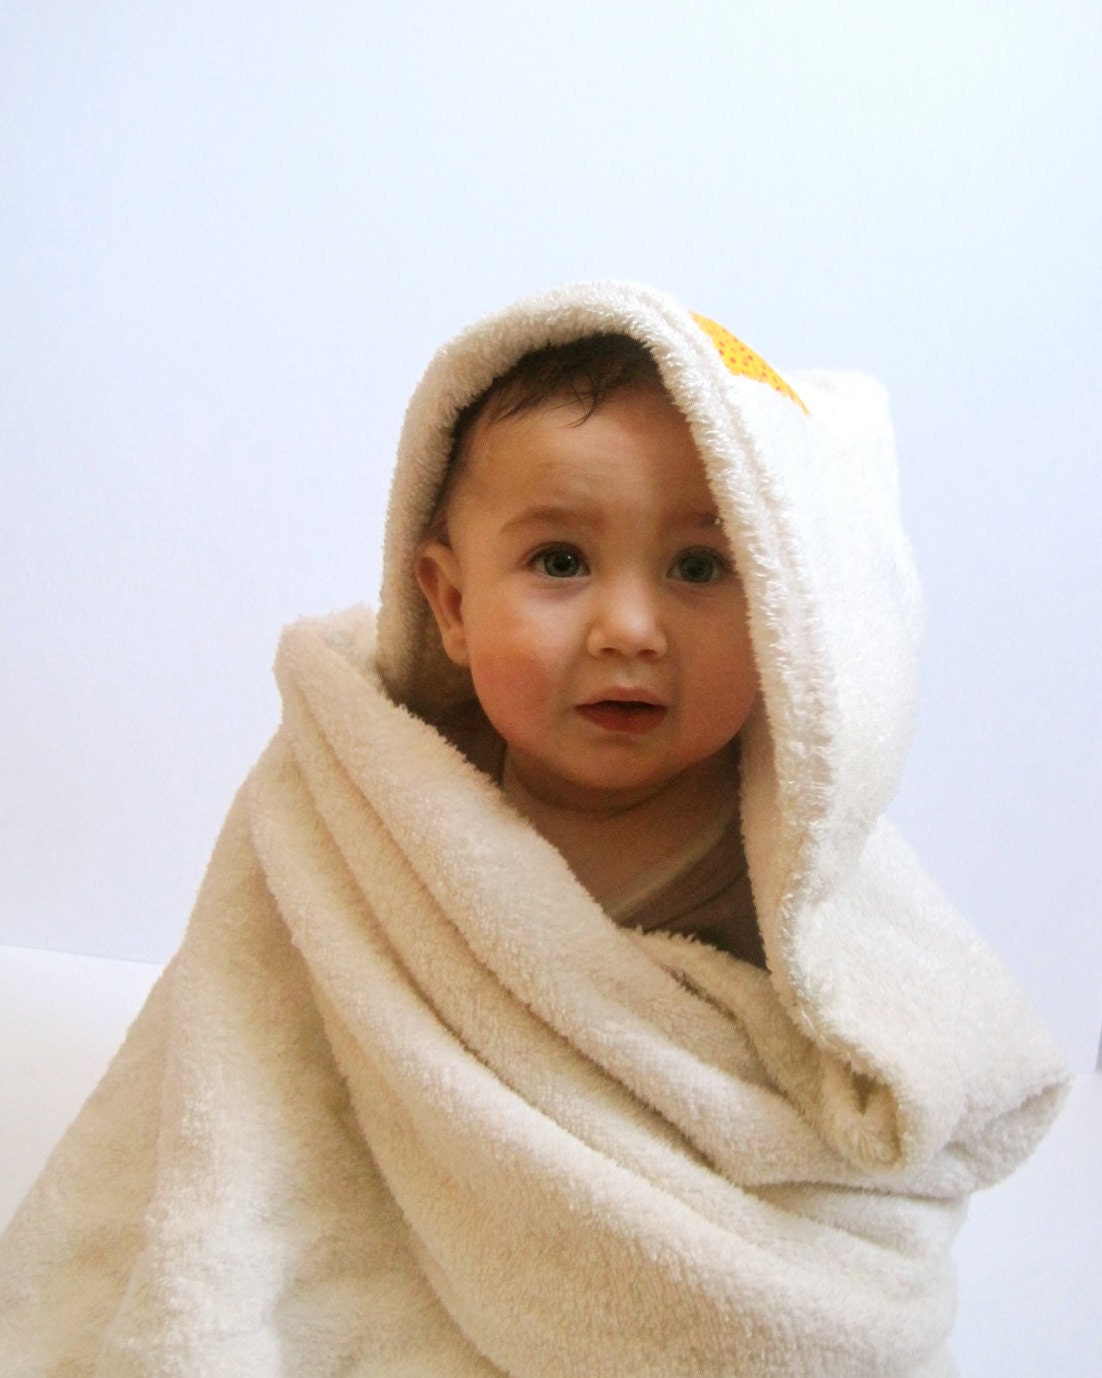 Fox Baby Bath Towel / Fox Hooded Towel Tutorial | Hooded towel tutorial, Baby ... - Elegant baby fox hooded towel $ 31.95;